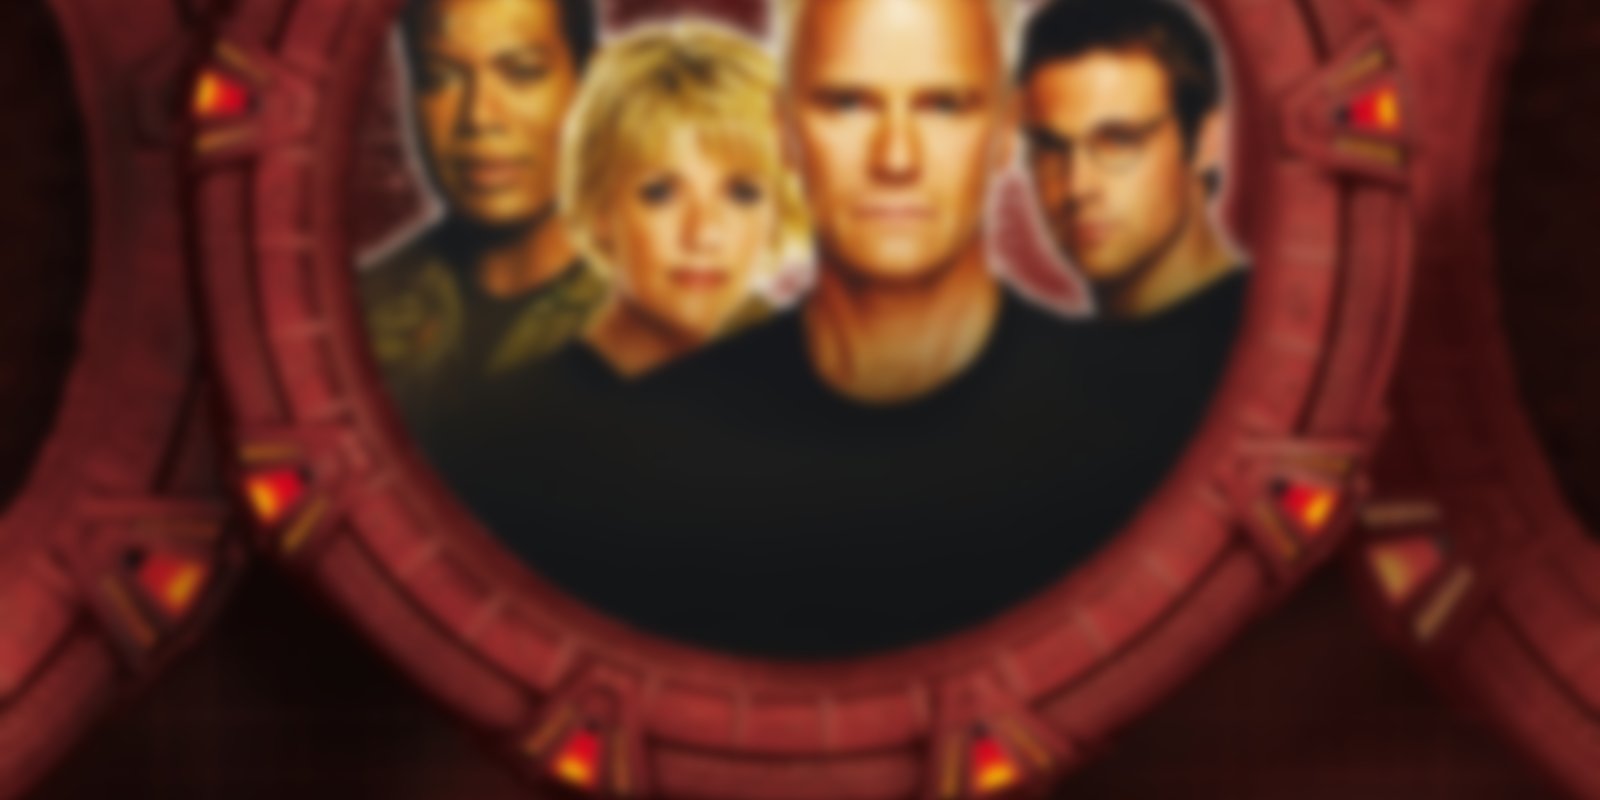 Stargate: Kommando SG-1 - Staffel 8